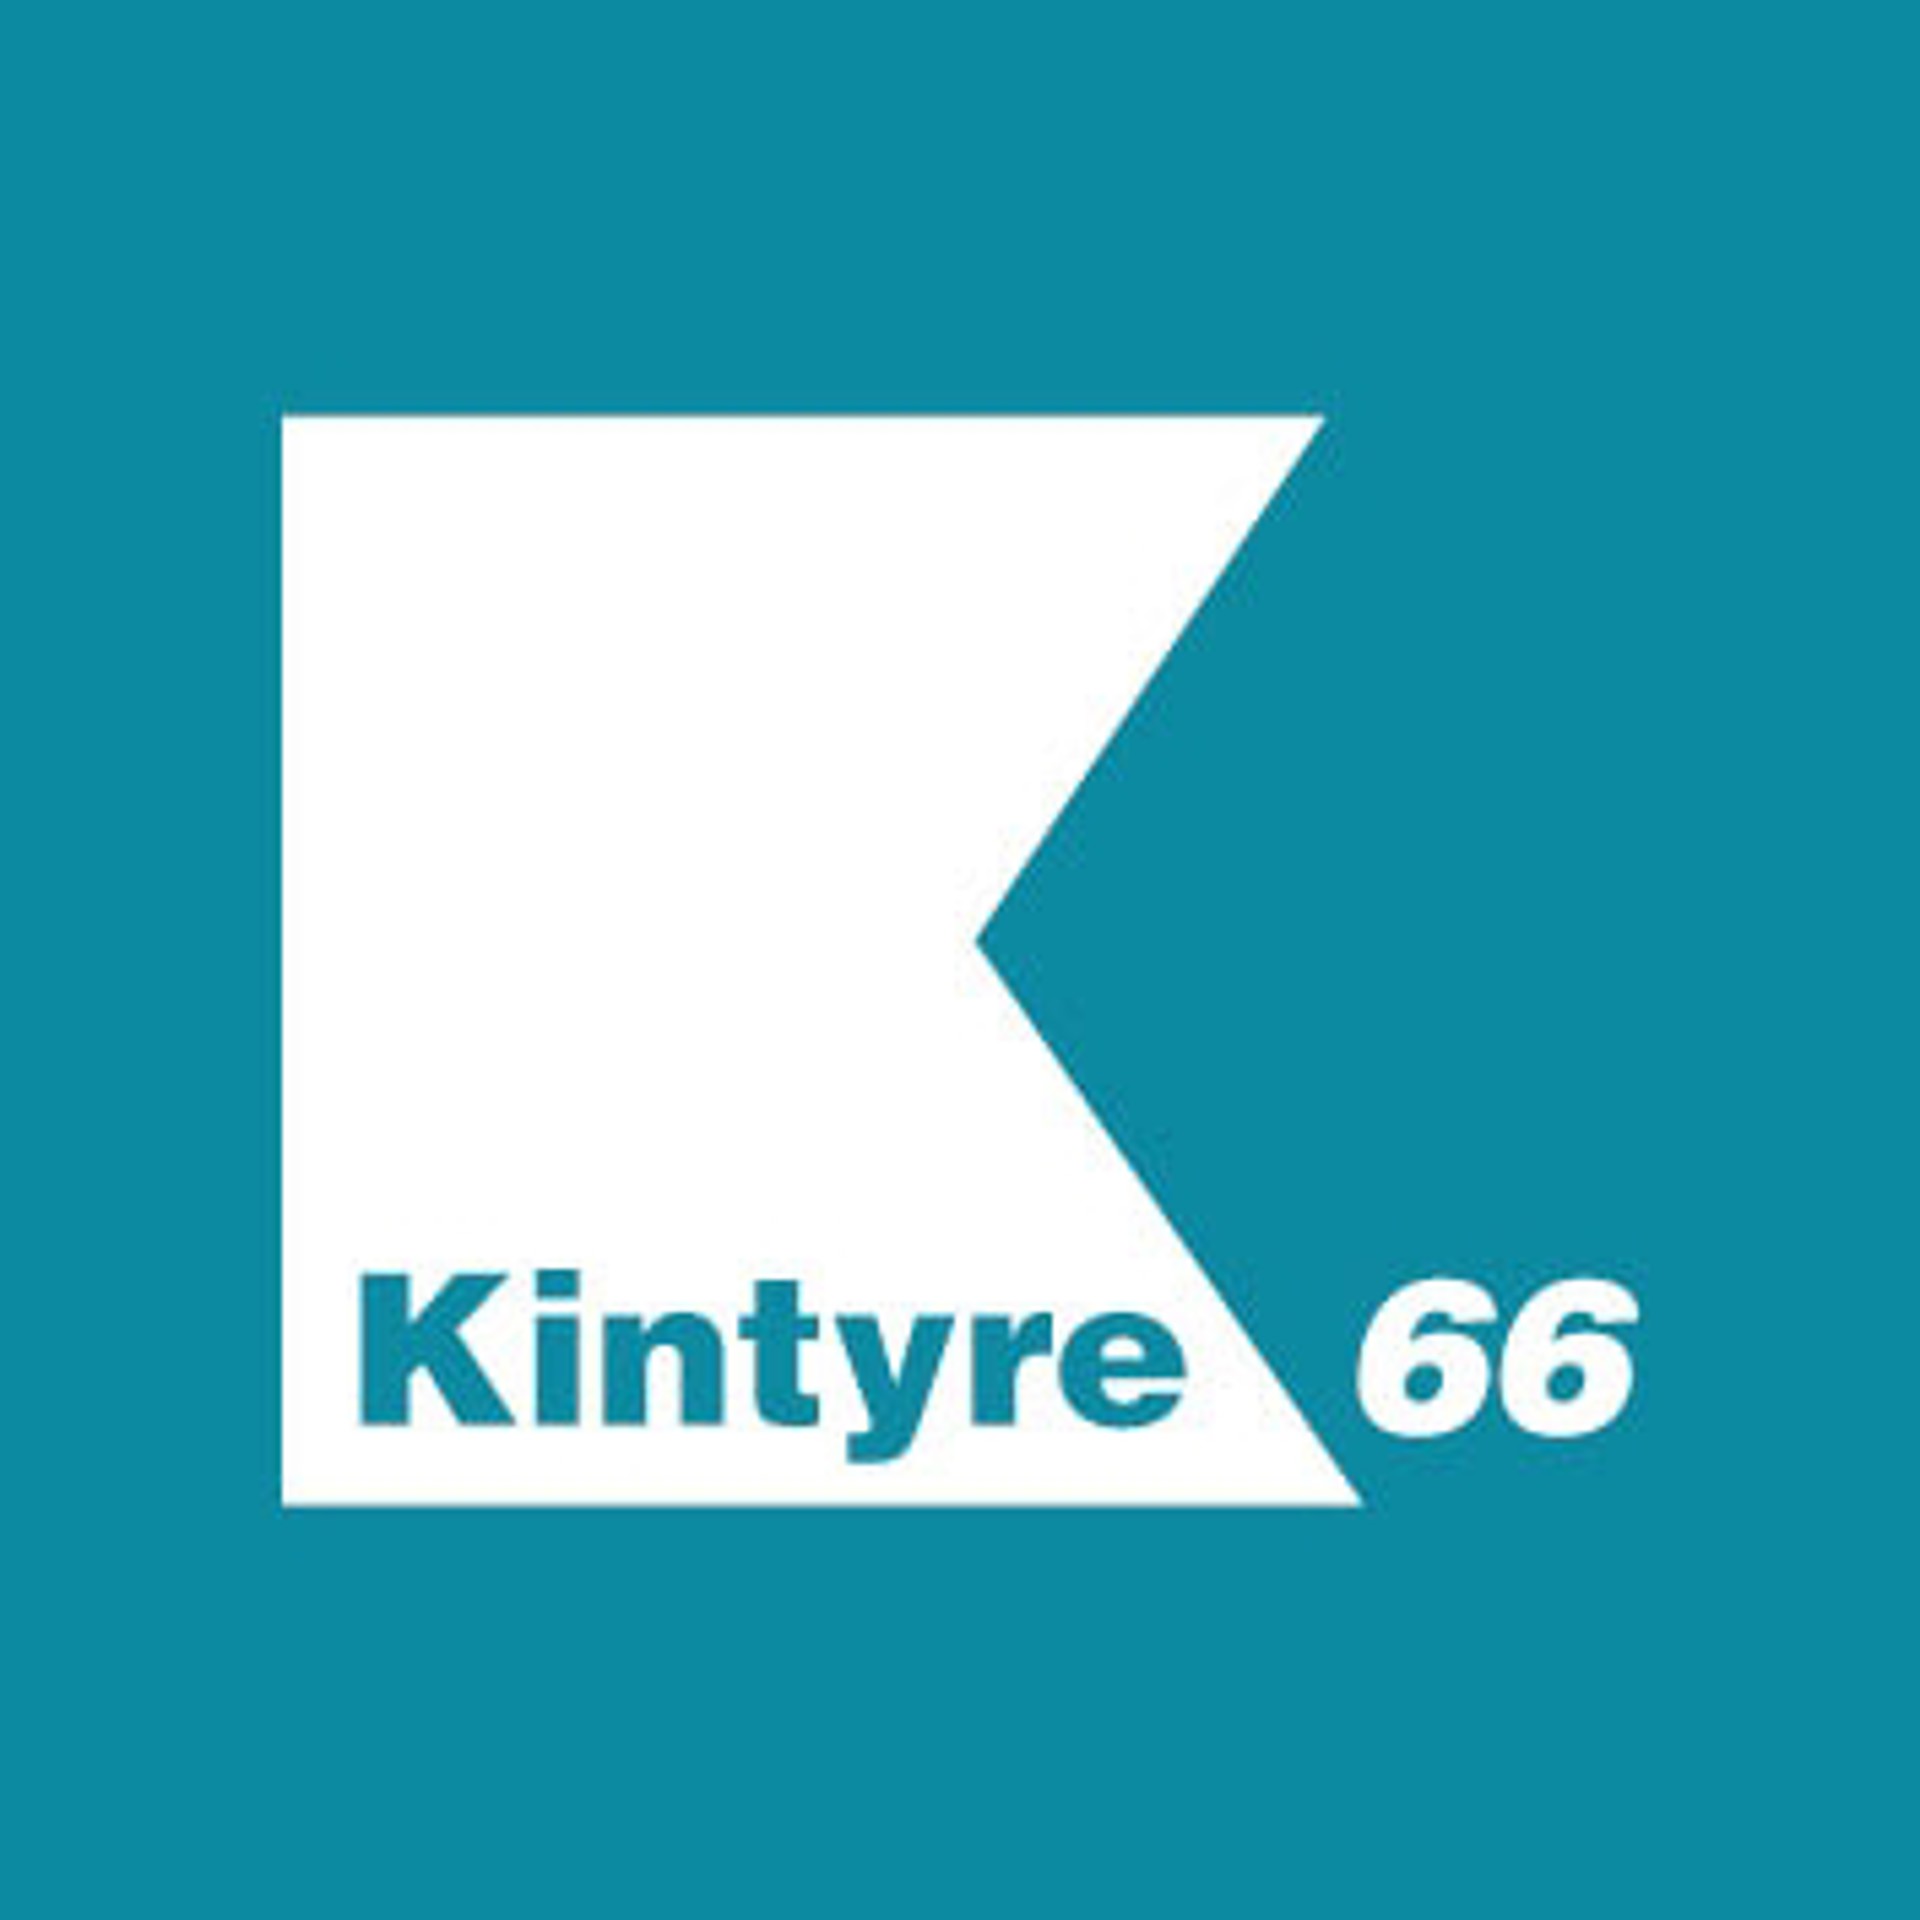 Kintyre 66